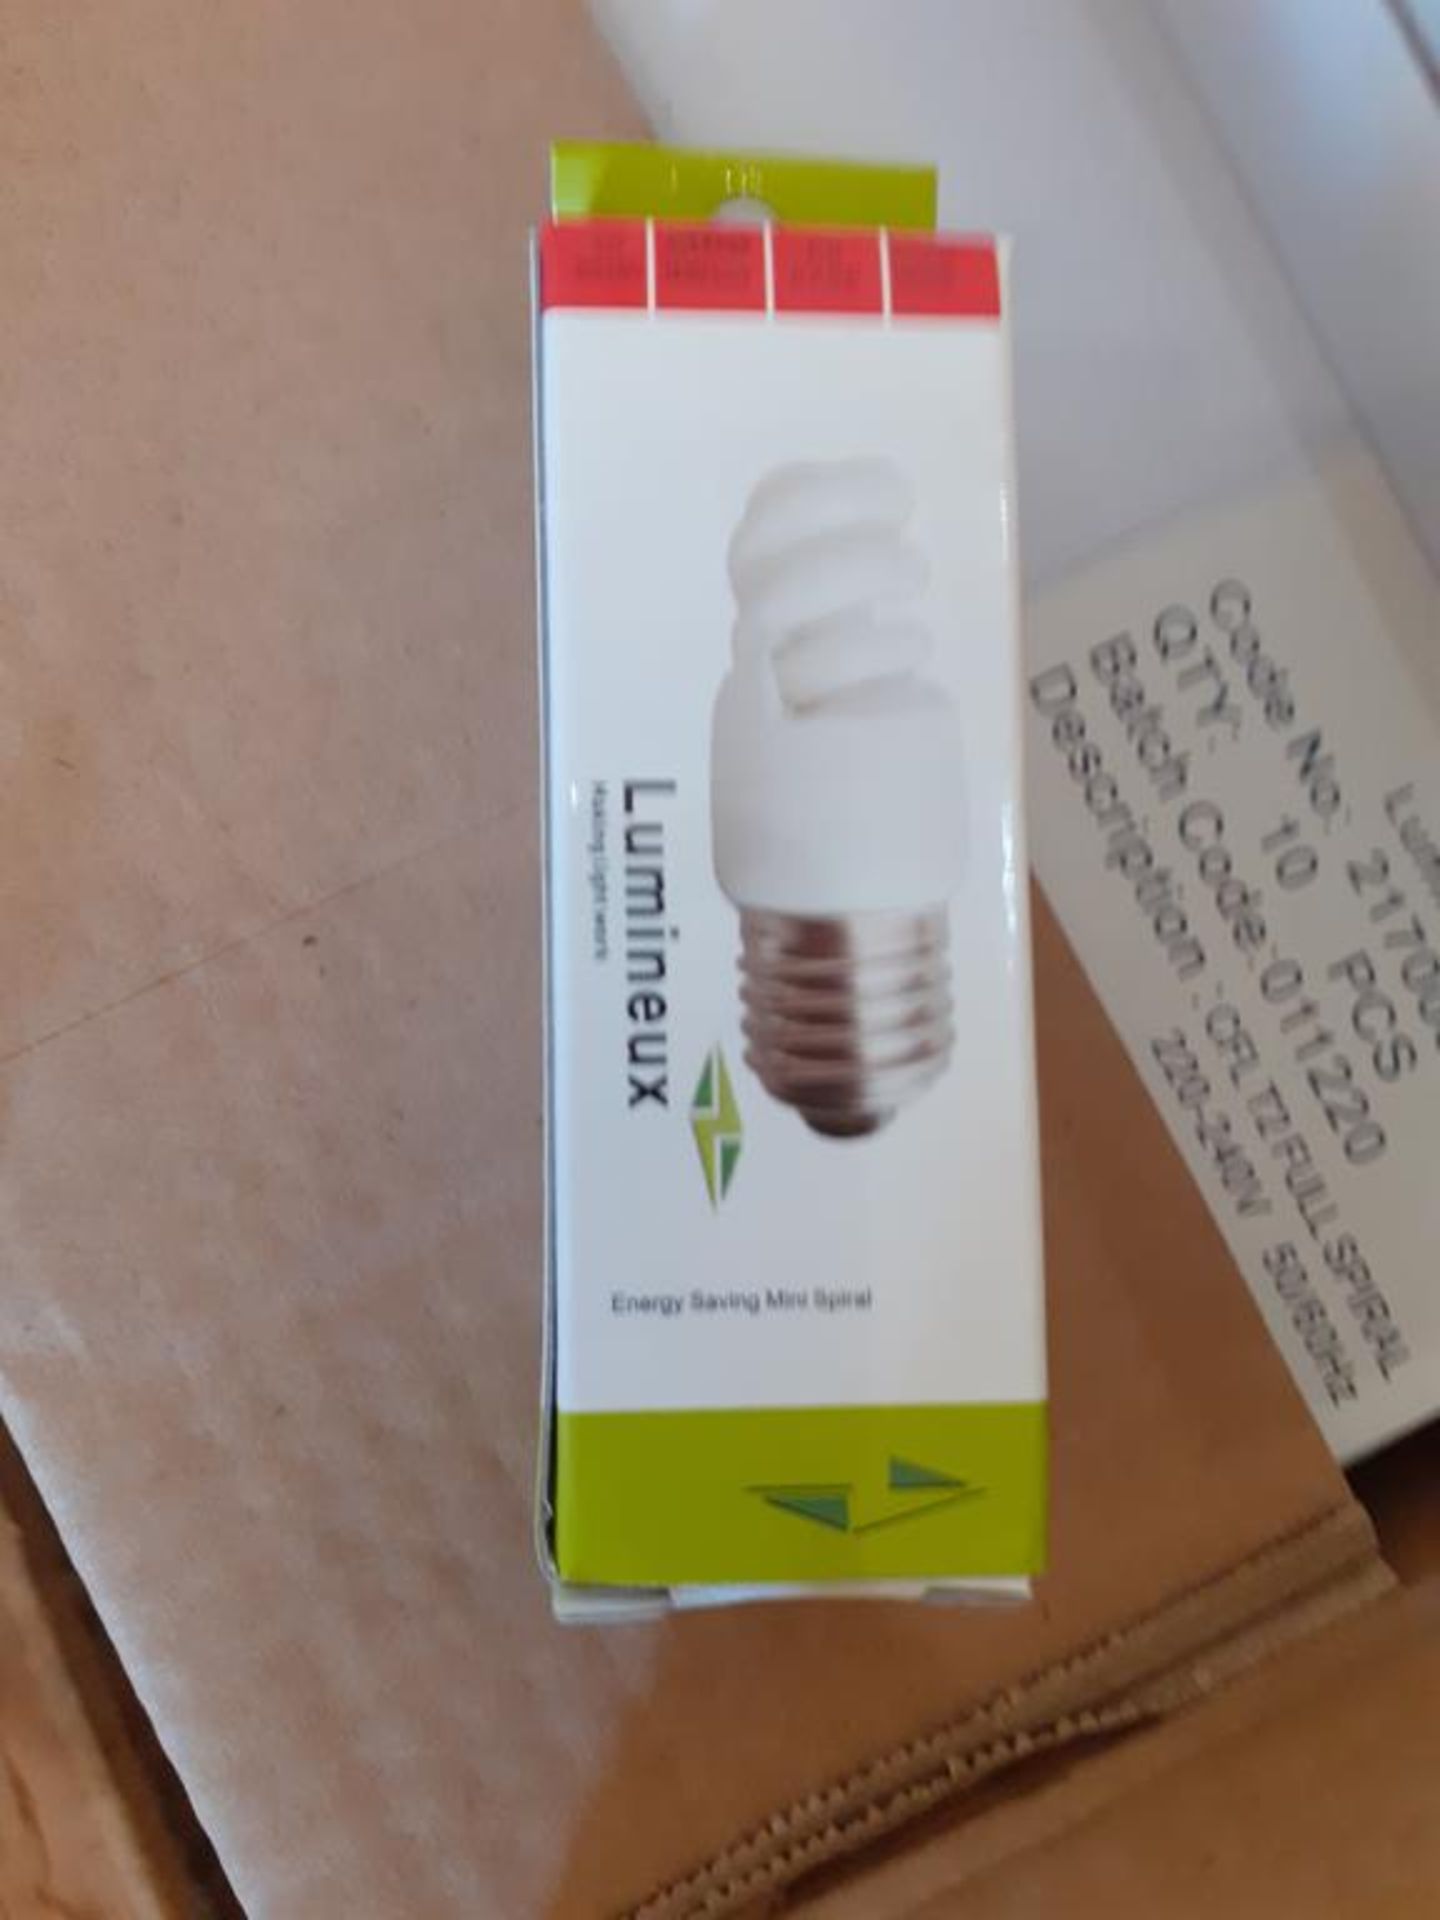 4x boxes of Lumineux Micro Spiral CFL 9W E27 2400K Warm White Energy Saving Bulbs (100pcs per box) - Image 3 of 5